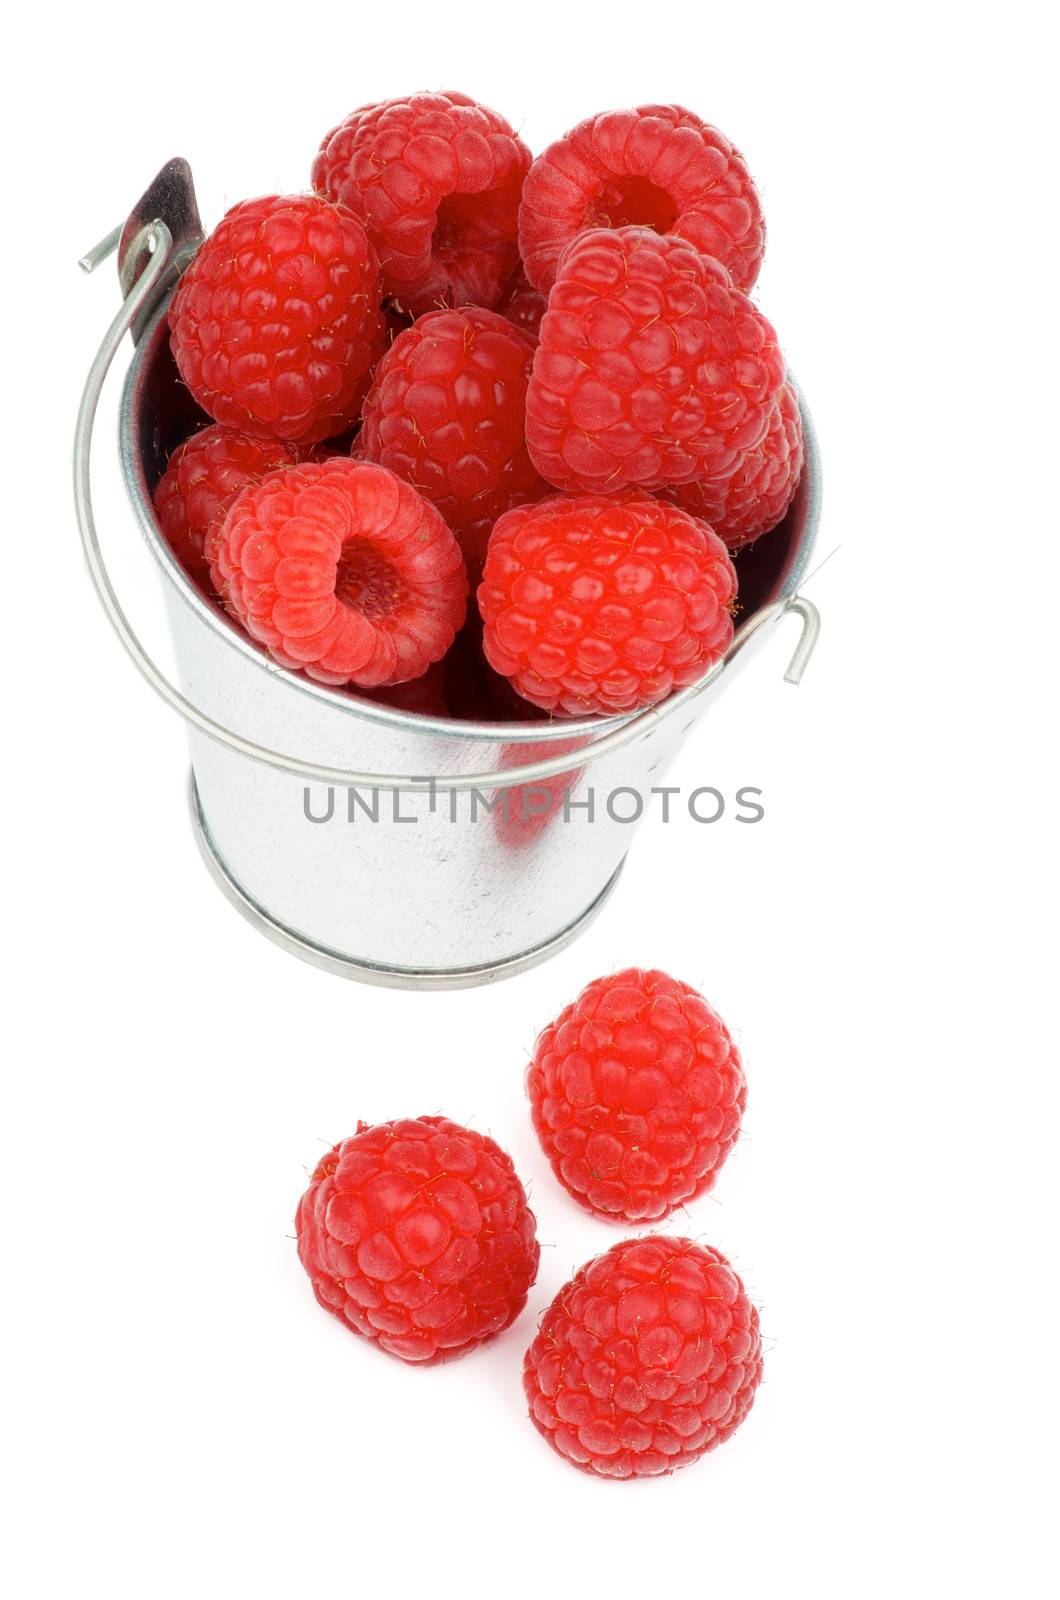 Raspberries by zhekos